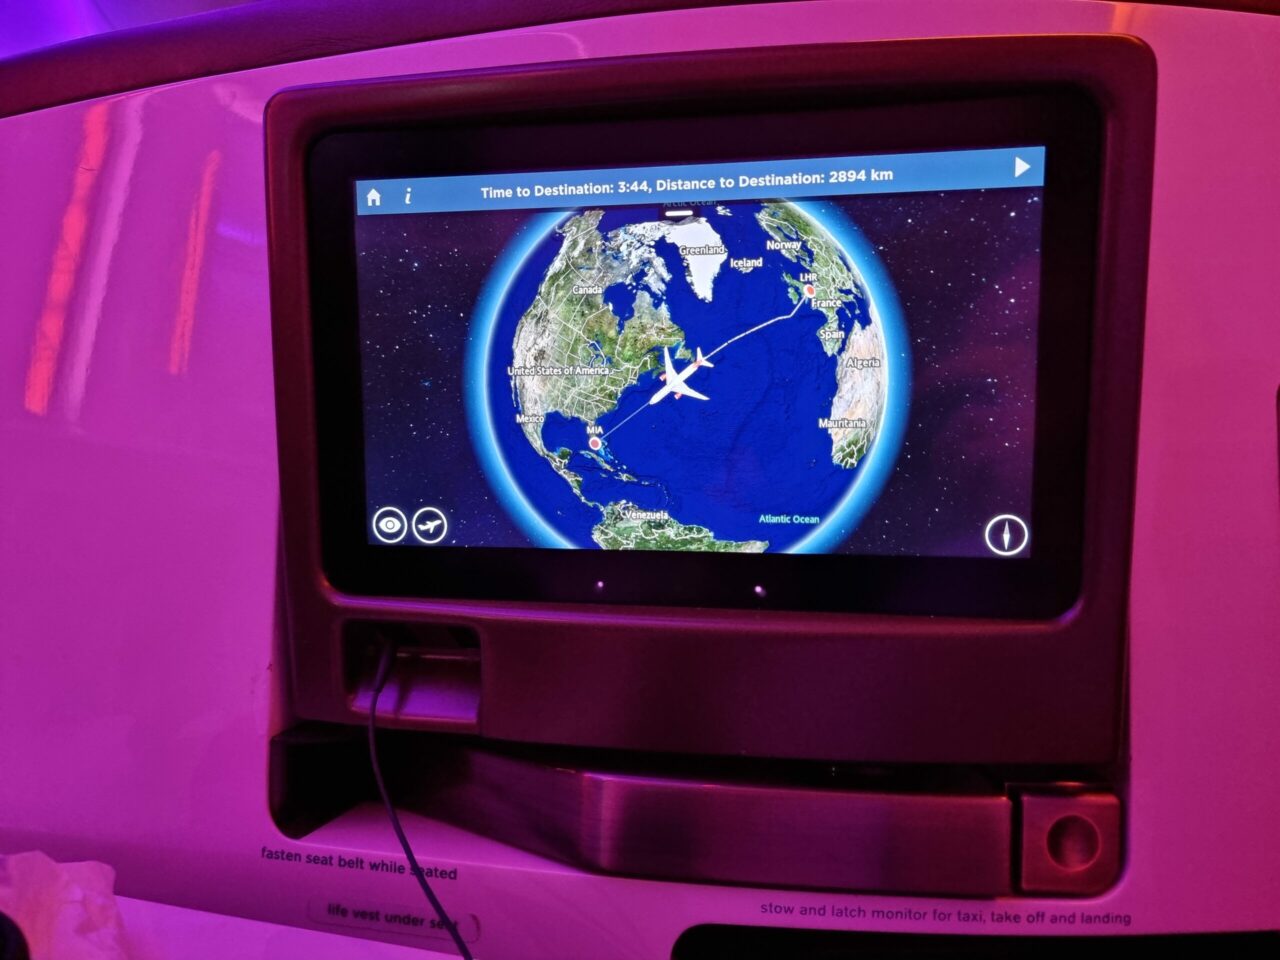 Virgin Atlantic Upper Class entertainment screen